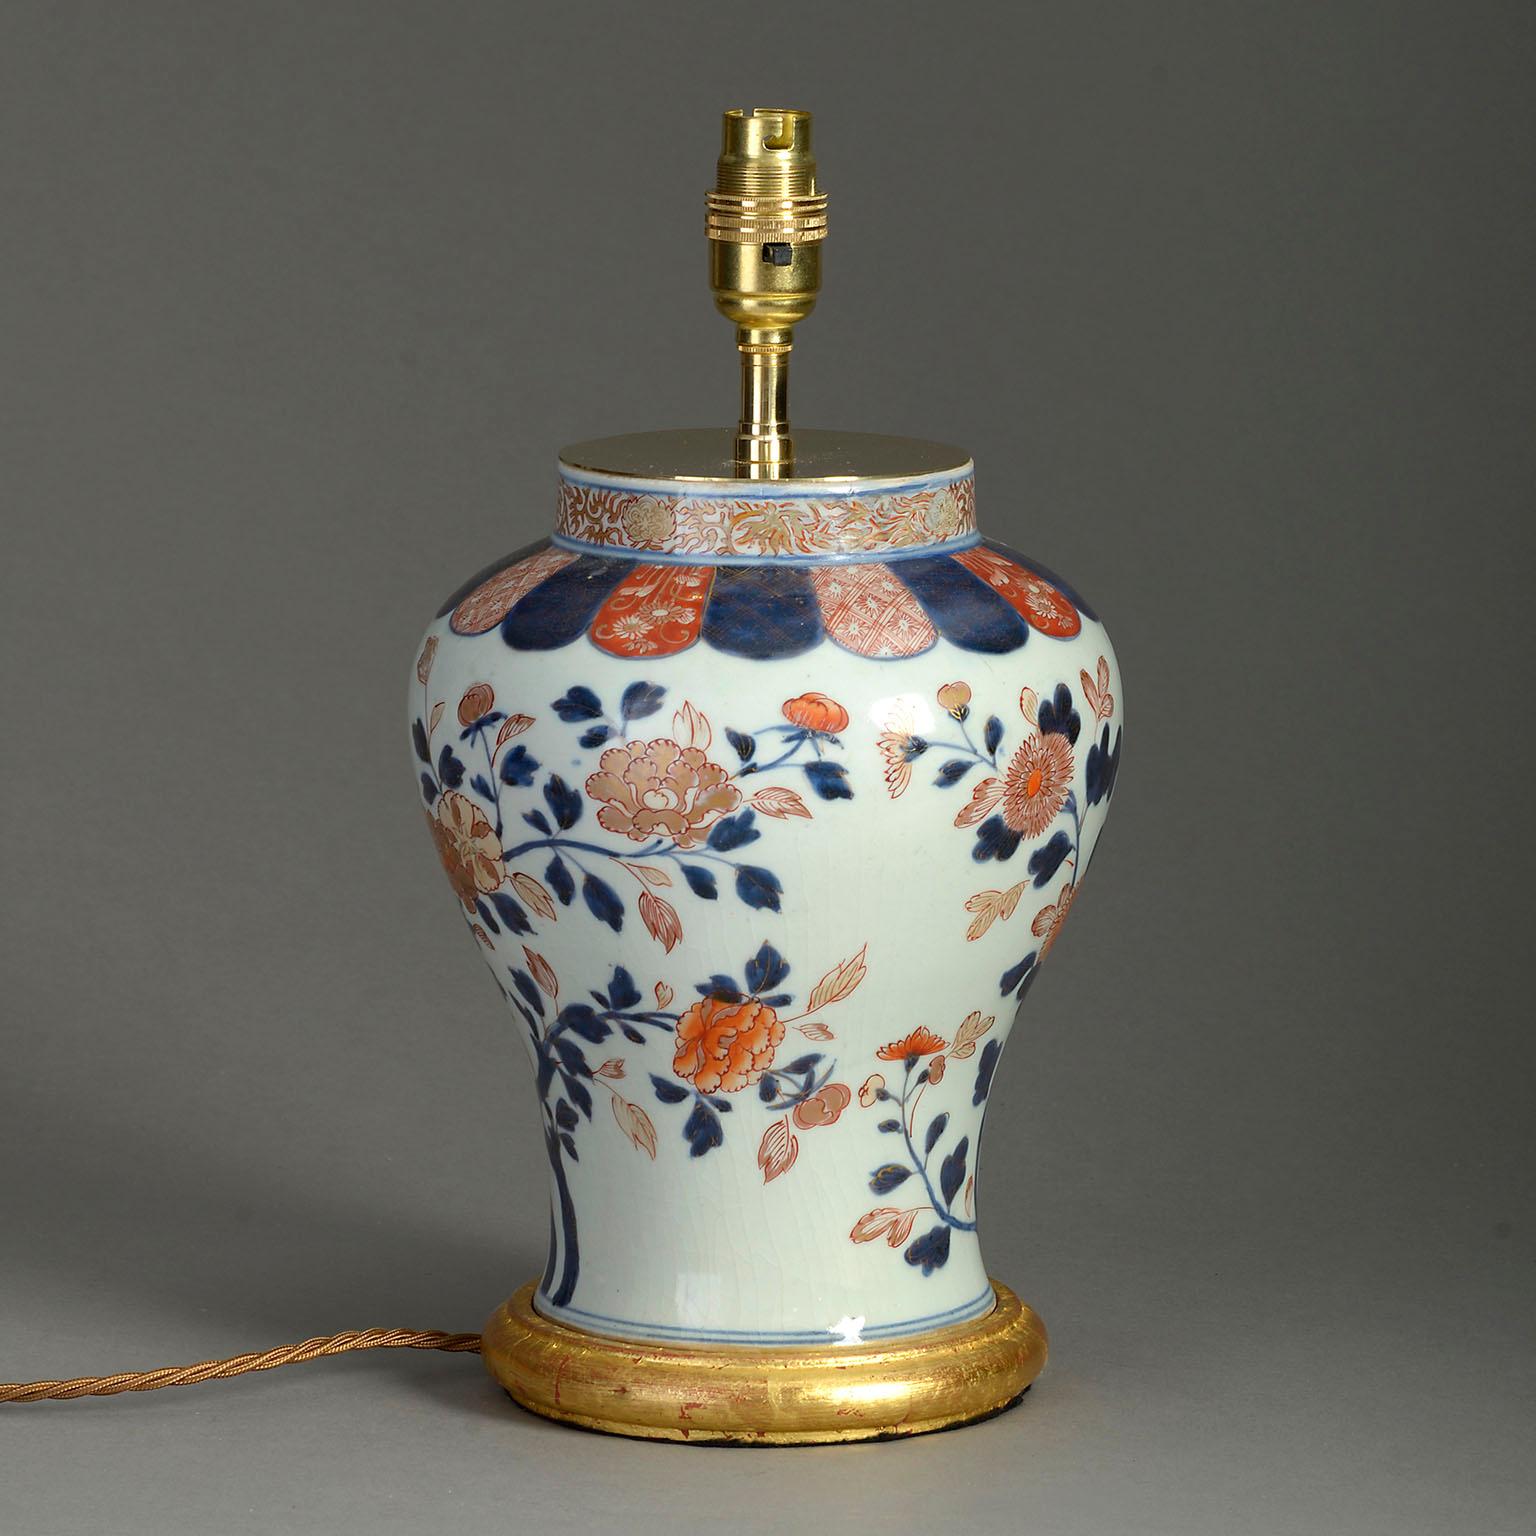 Anglo-Japanese Early 18th Century Imari Porcelain Vase Lamp